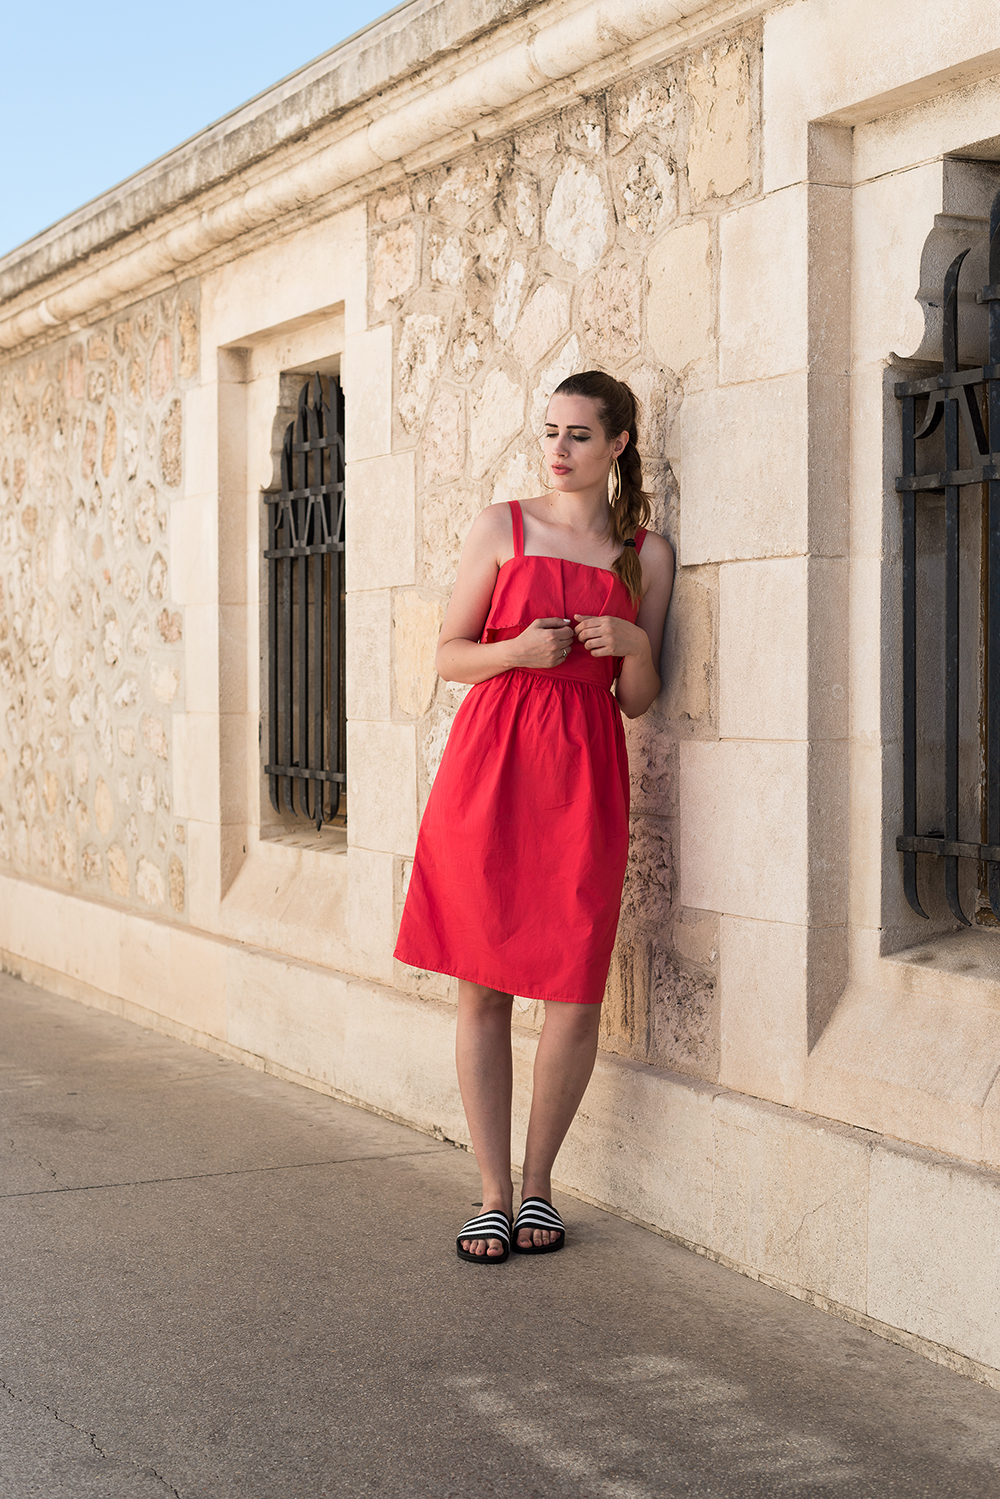 andysparkles-Modeblog Berlin-Outfit-Adilette-JustFab-rotes Kleid